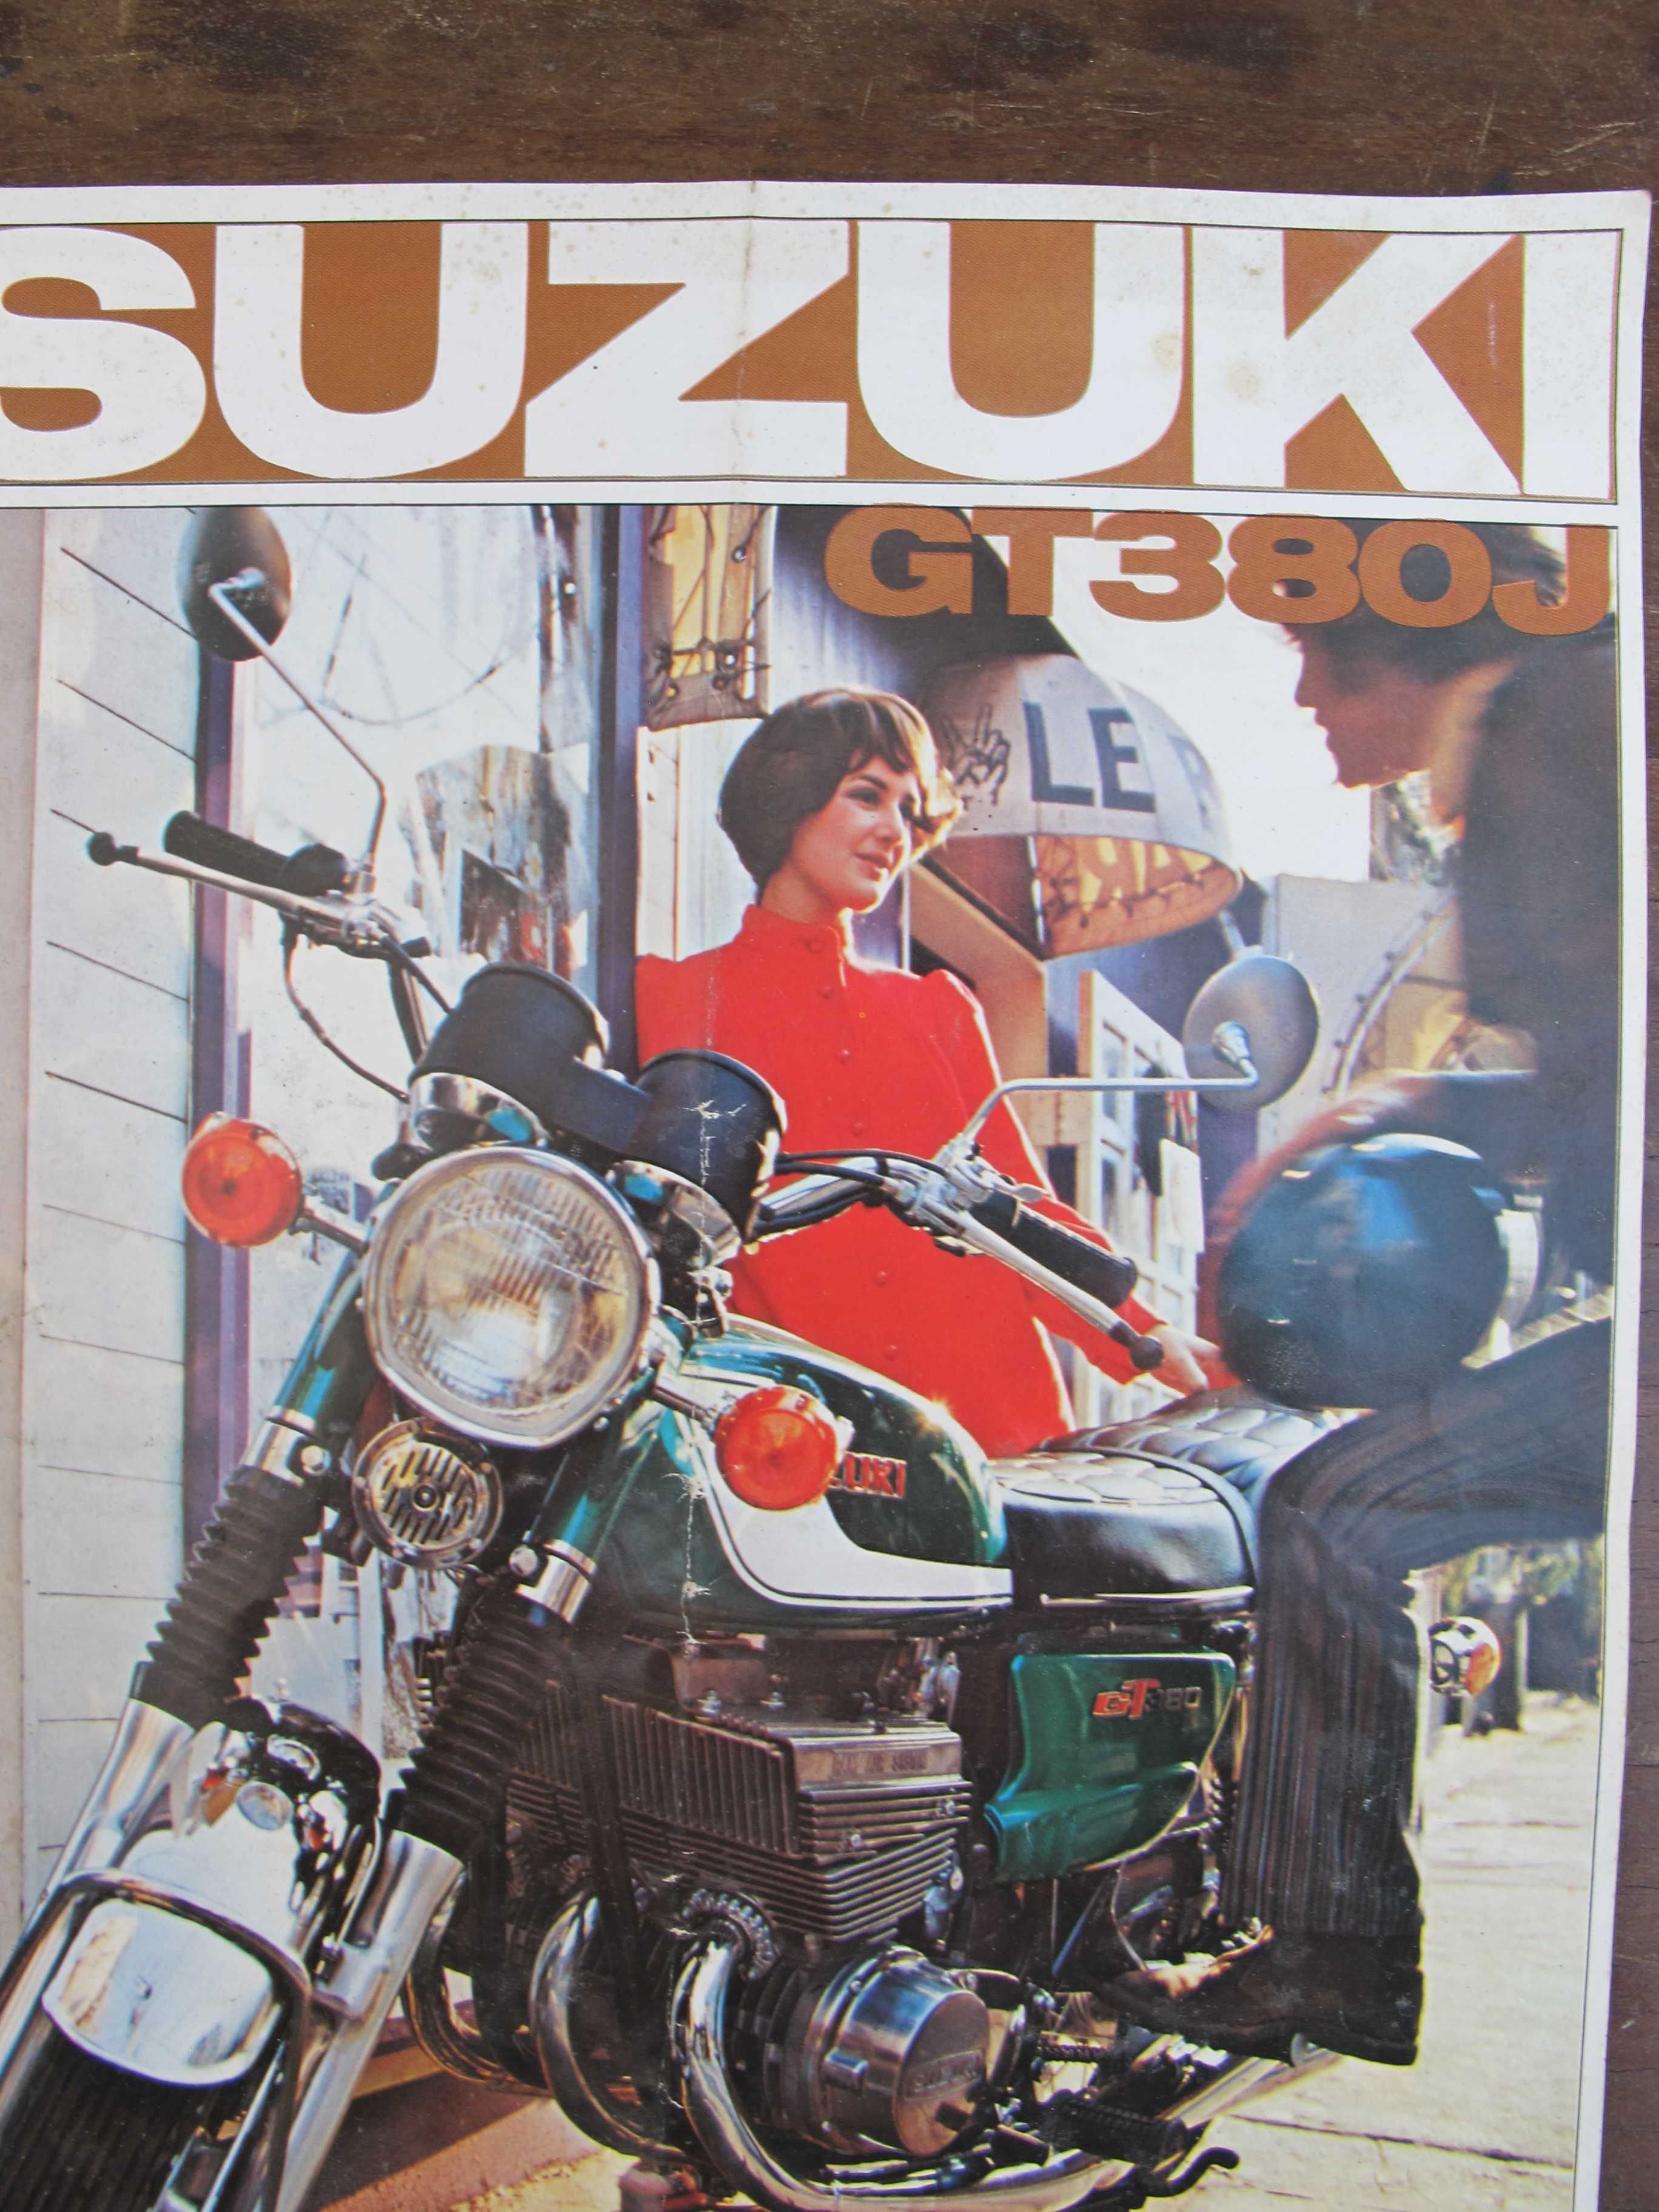 Brochura Suzuki GT 380 - Publicidade Mota Antiga